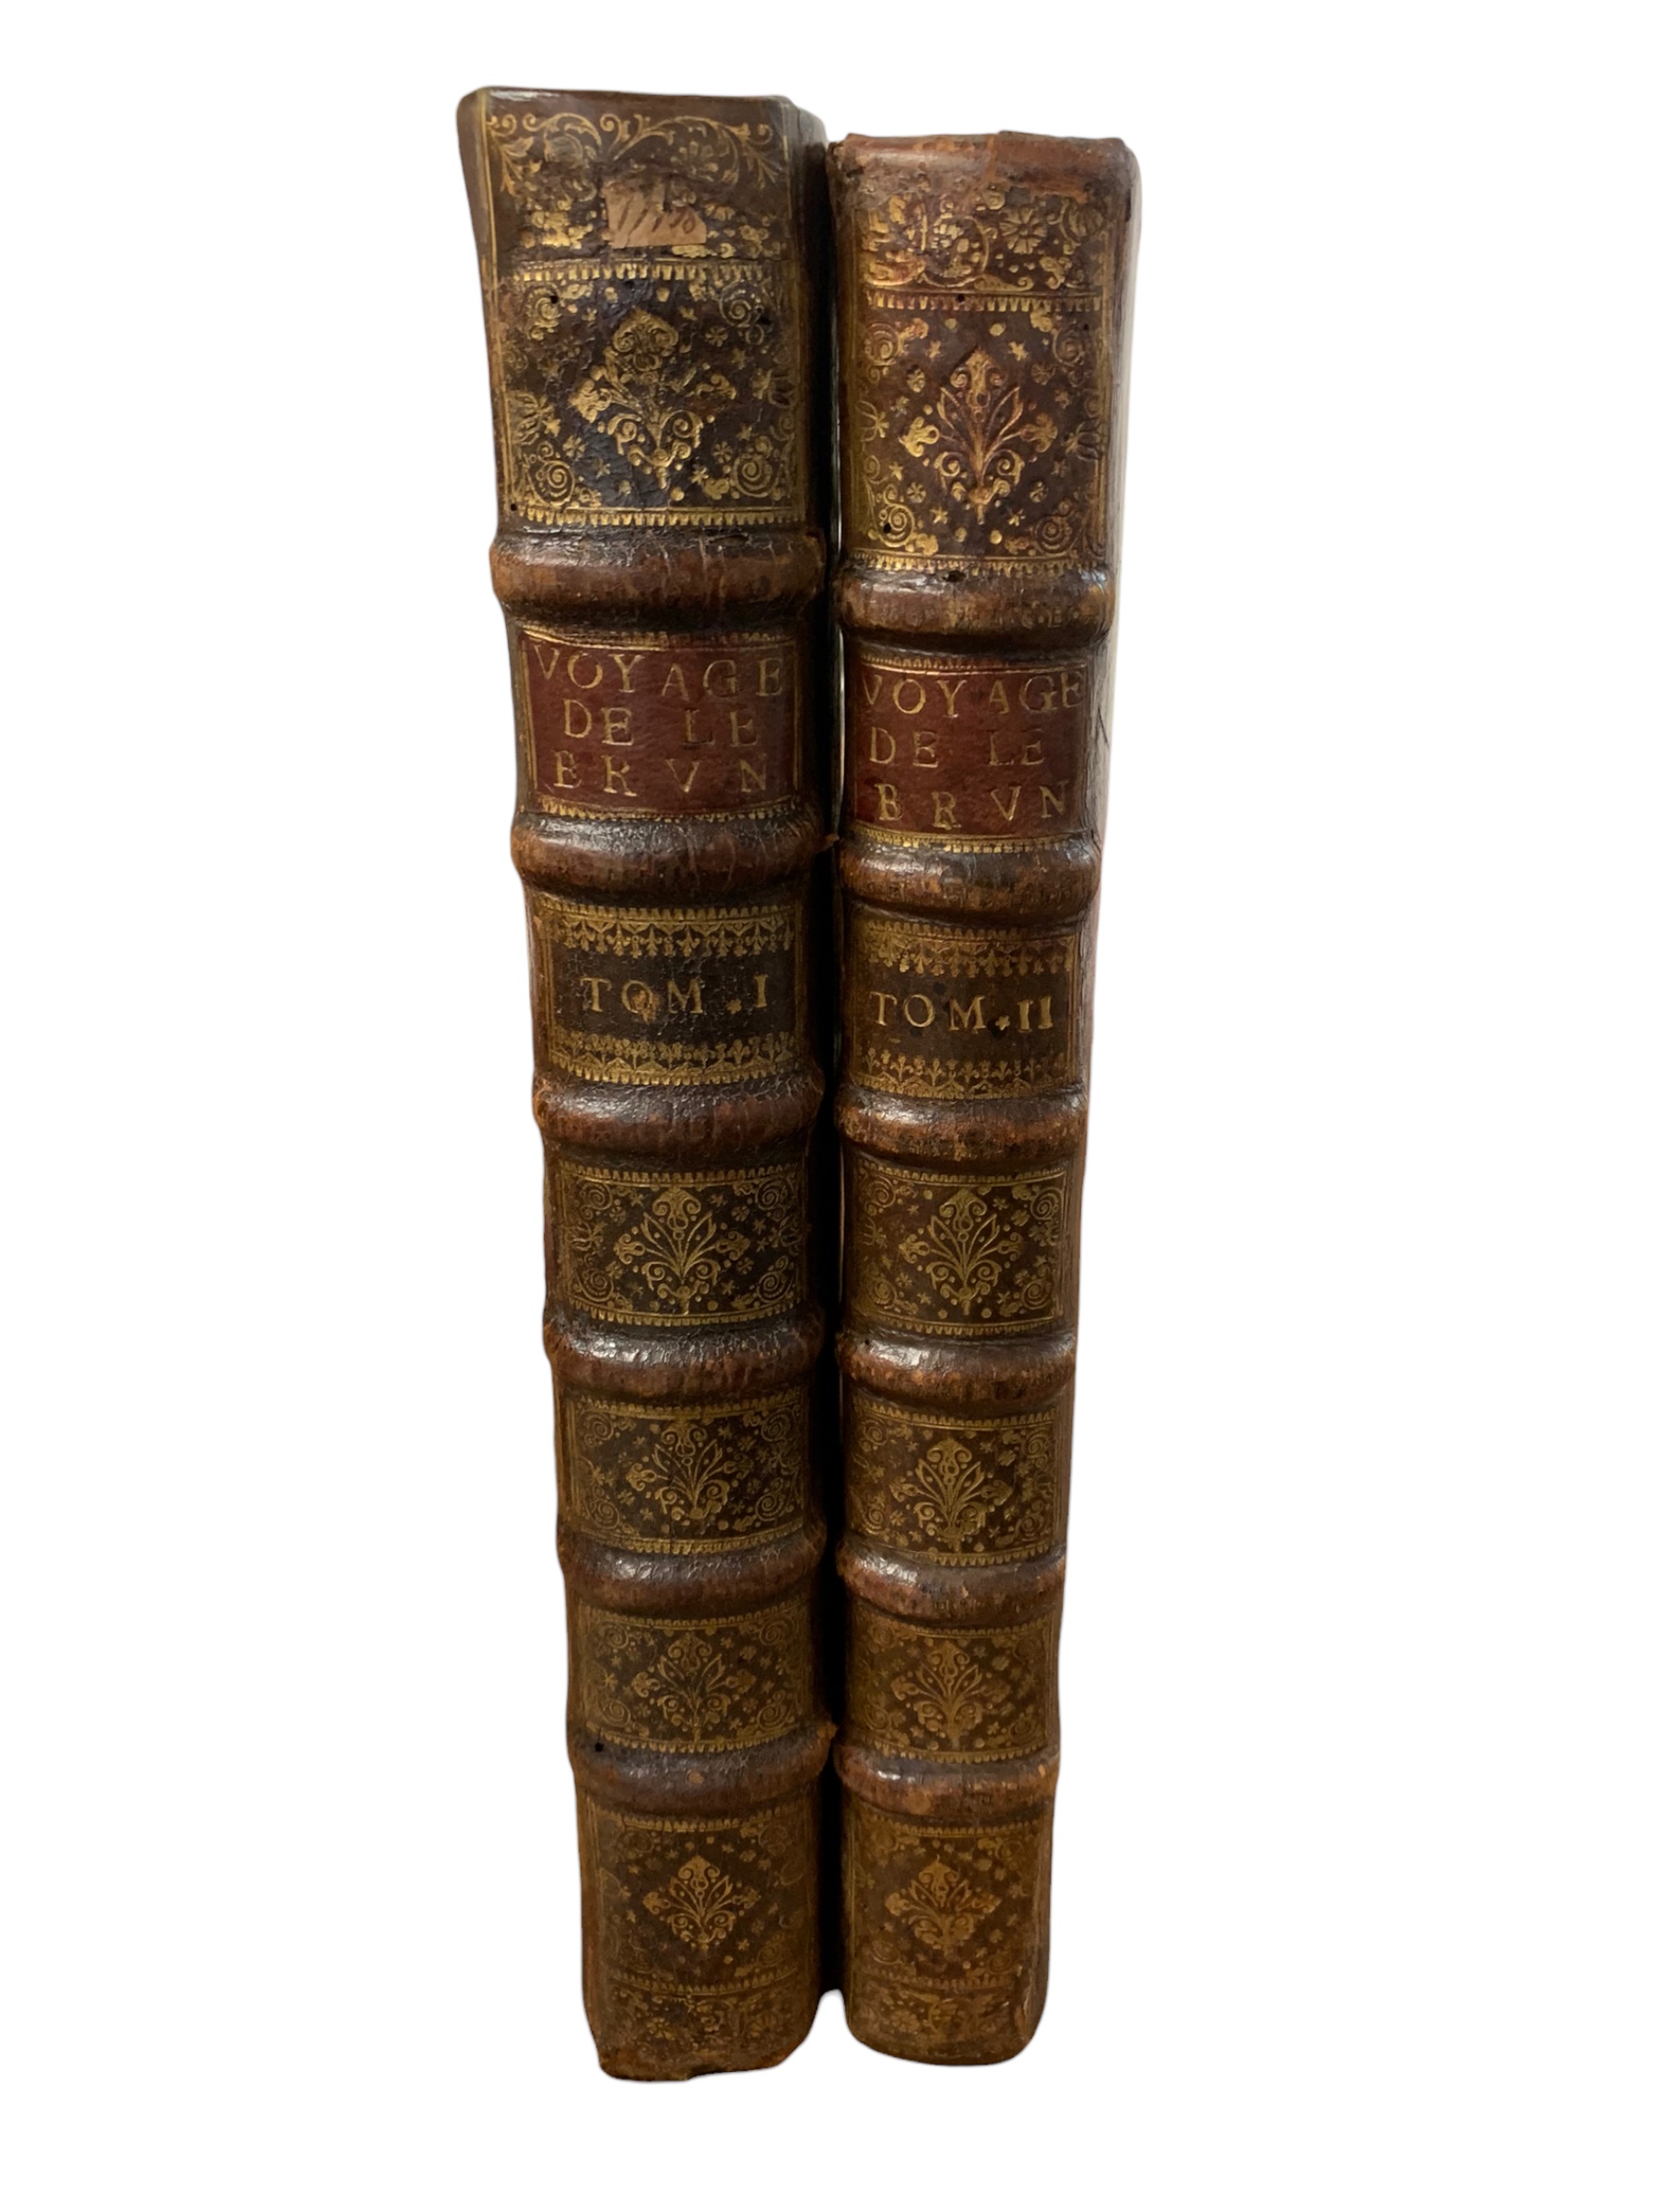 De Bruyn (Cornelis) Voyages... par la Moscovie, First French edition, - Image 9 of 9